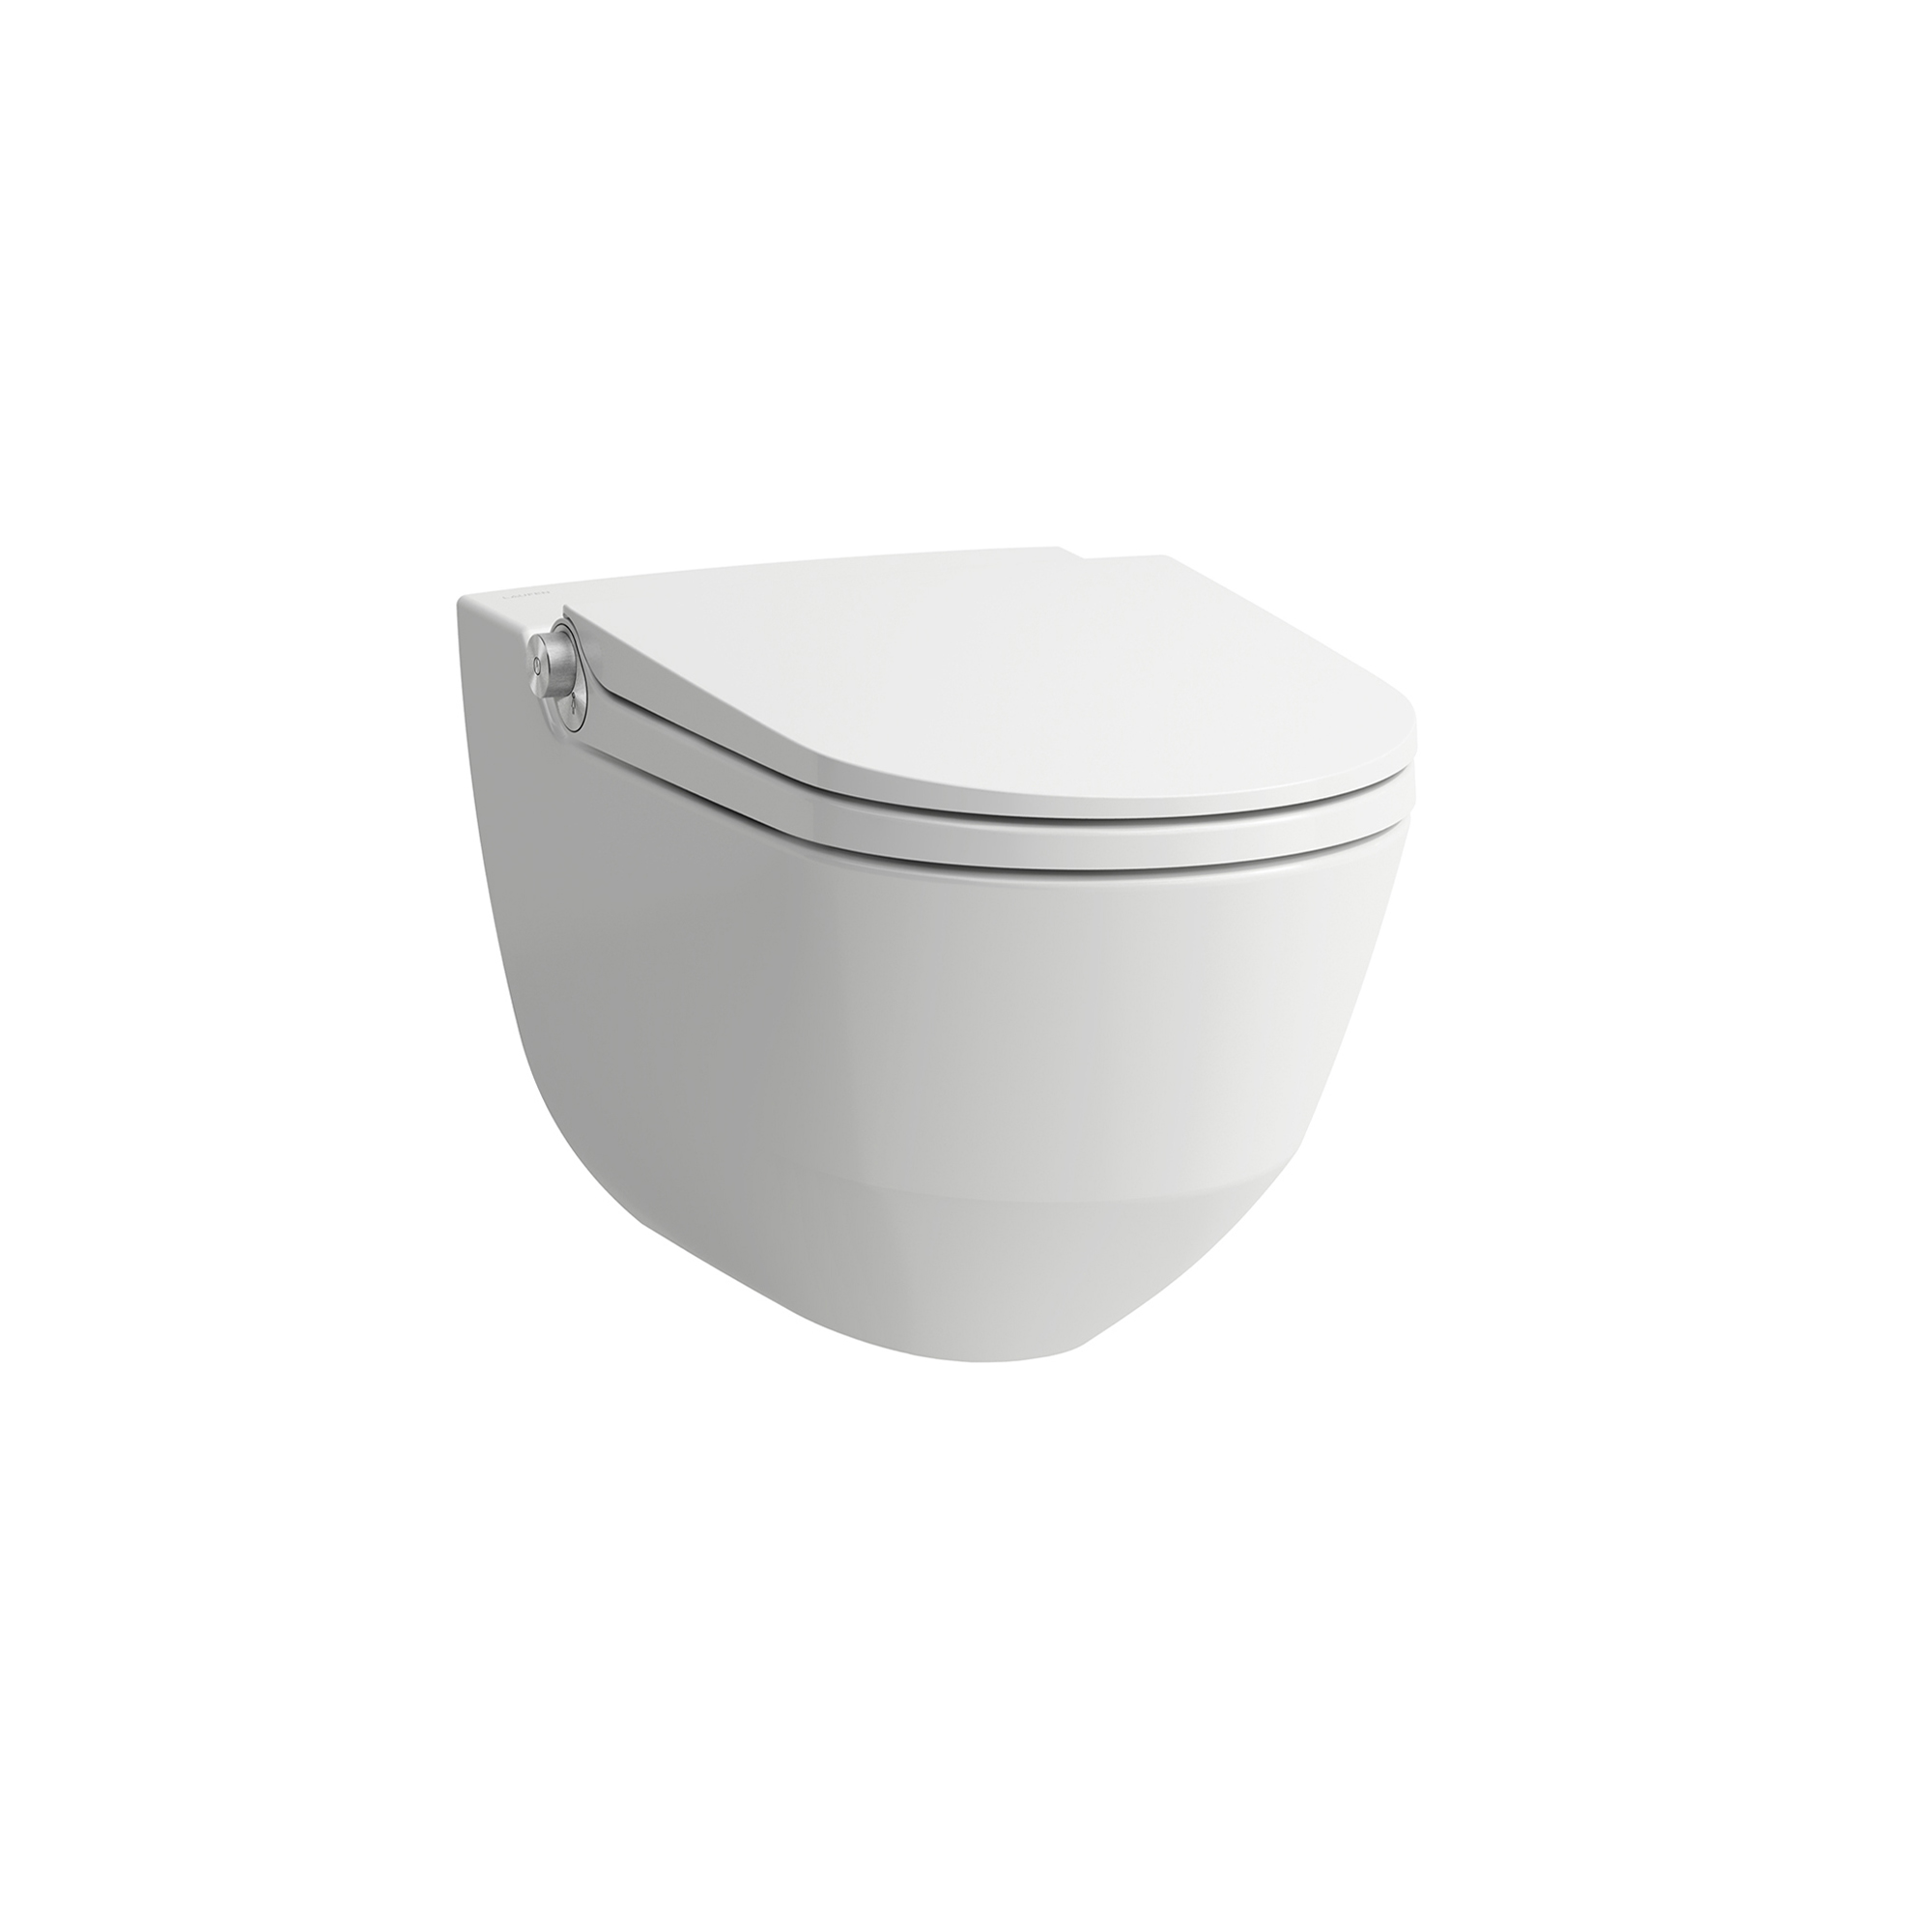 Dusch-Tiefspül-WC wandhängend CLEANET RIVA 600x395x405 spülrandlos LCC weiß